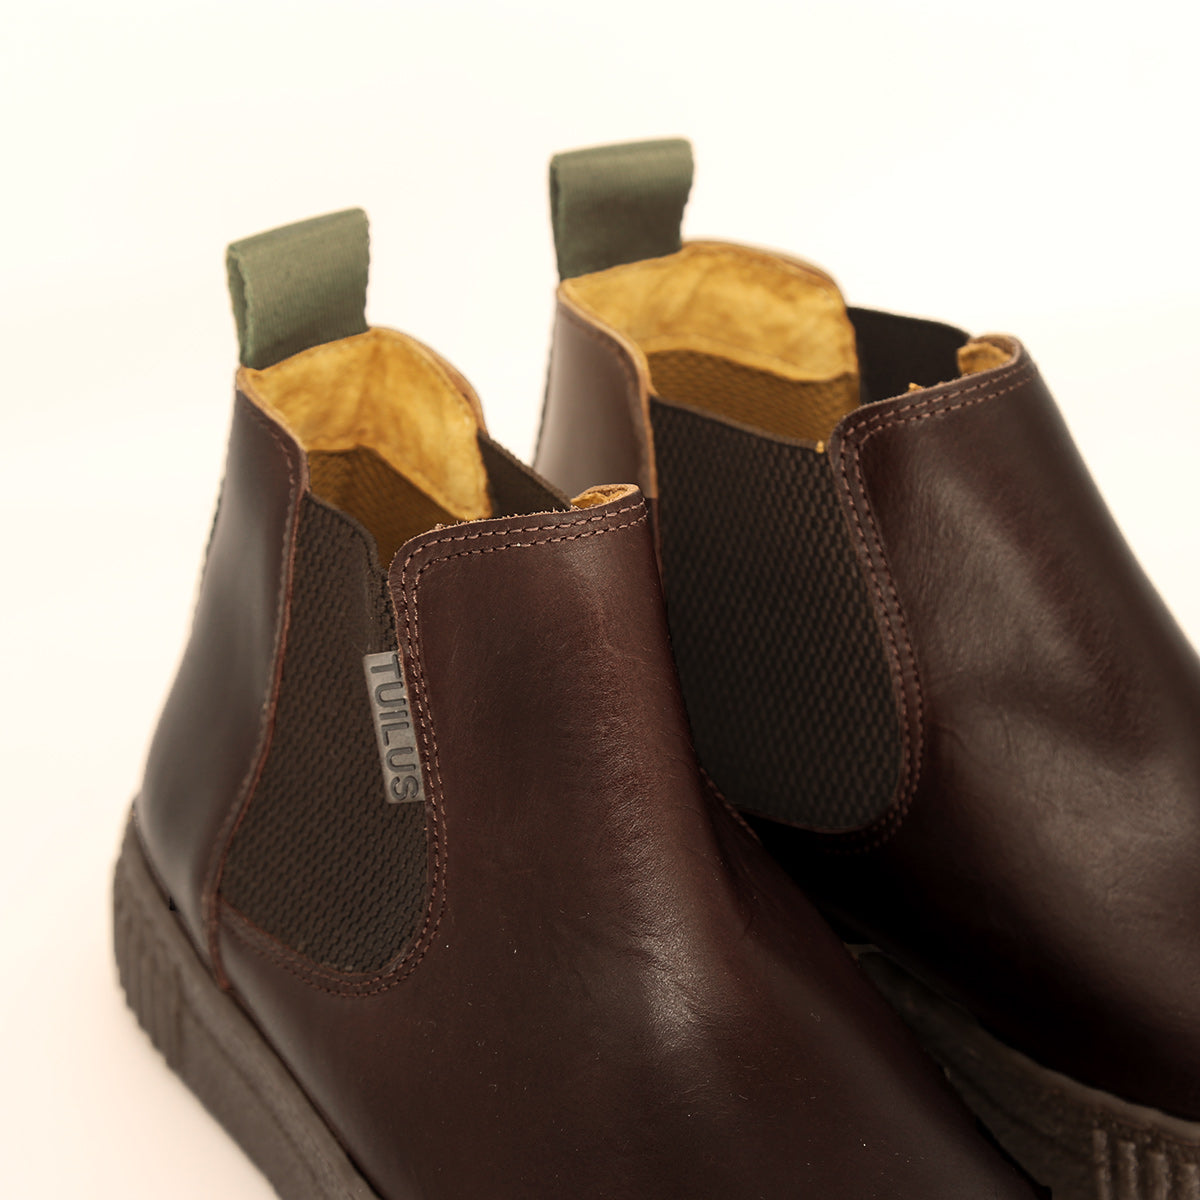 Mundaka Stripe Chocolate Leather Ankle Boot